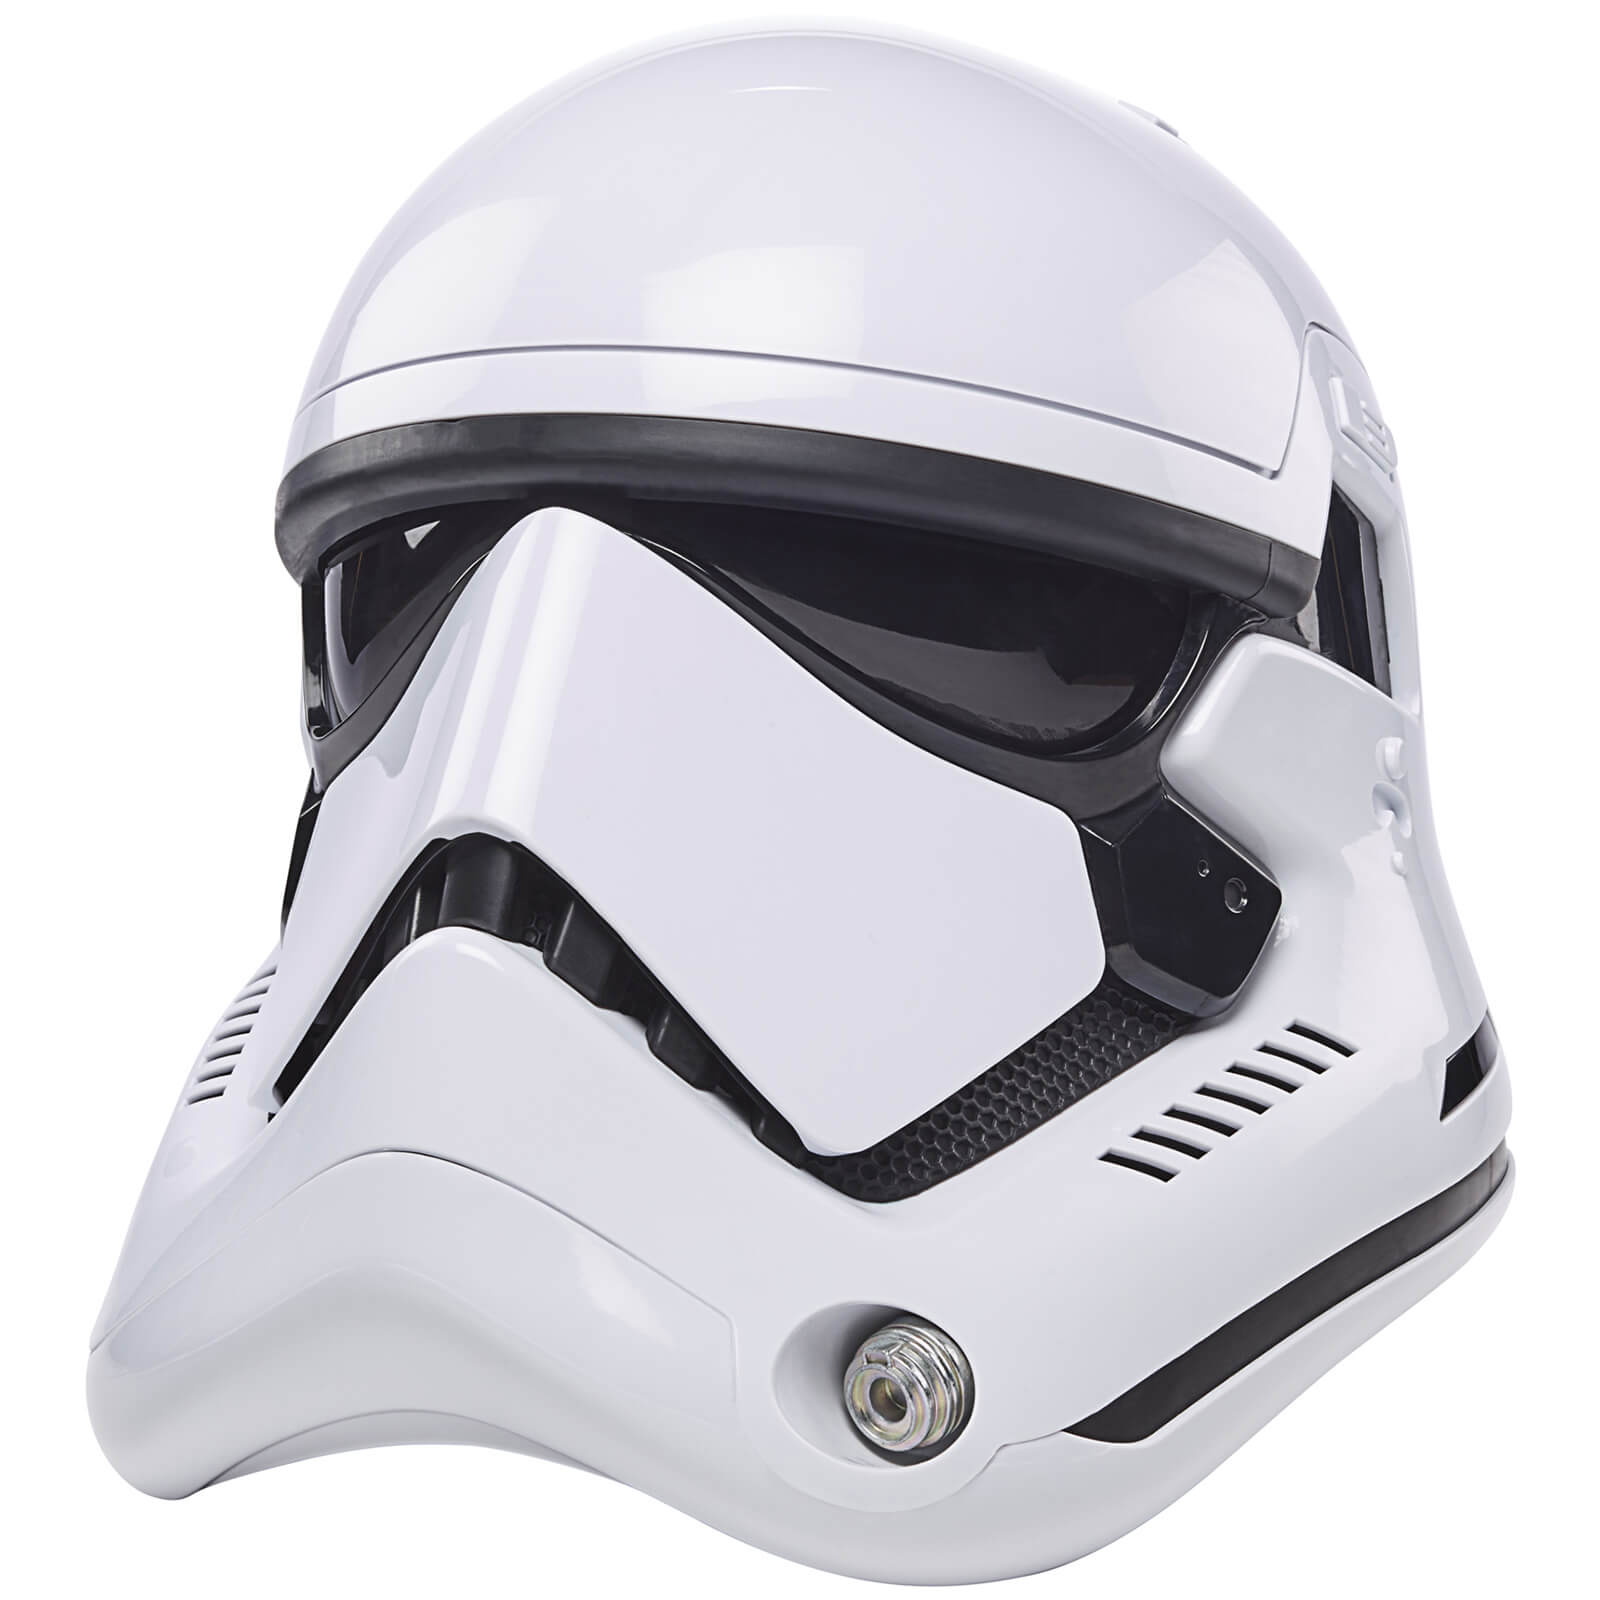 Hasbro Star Wars The Black Series First Order Stormtrooper Electronic Helmet